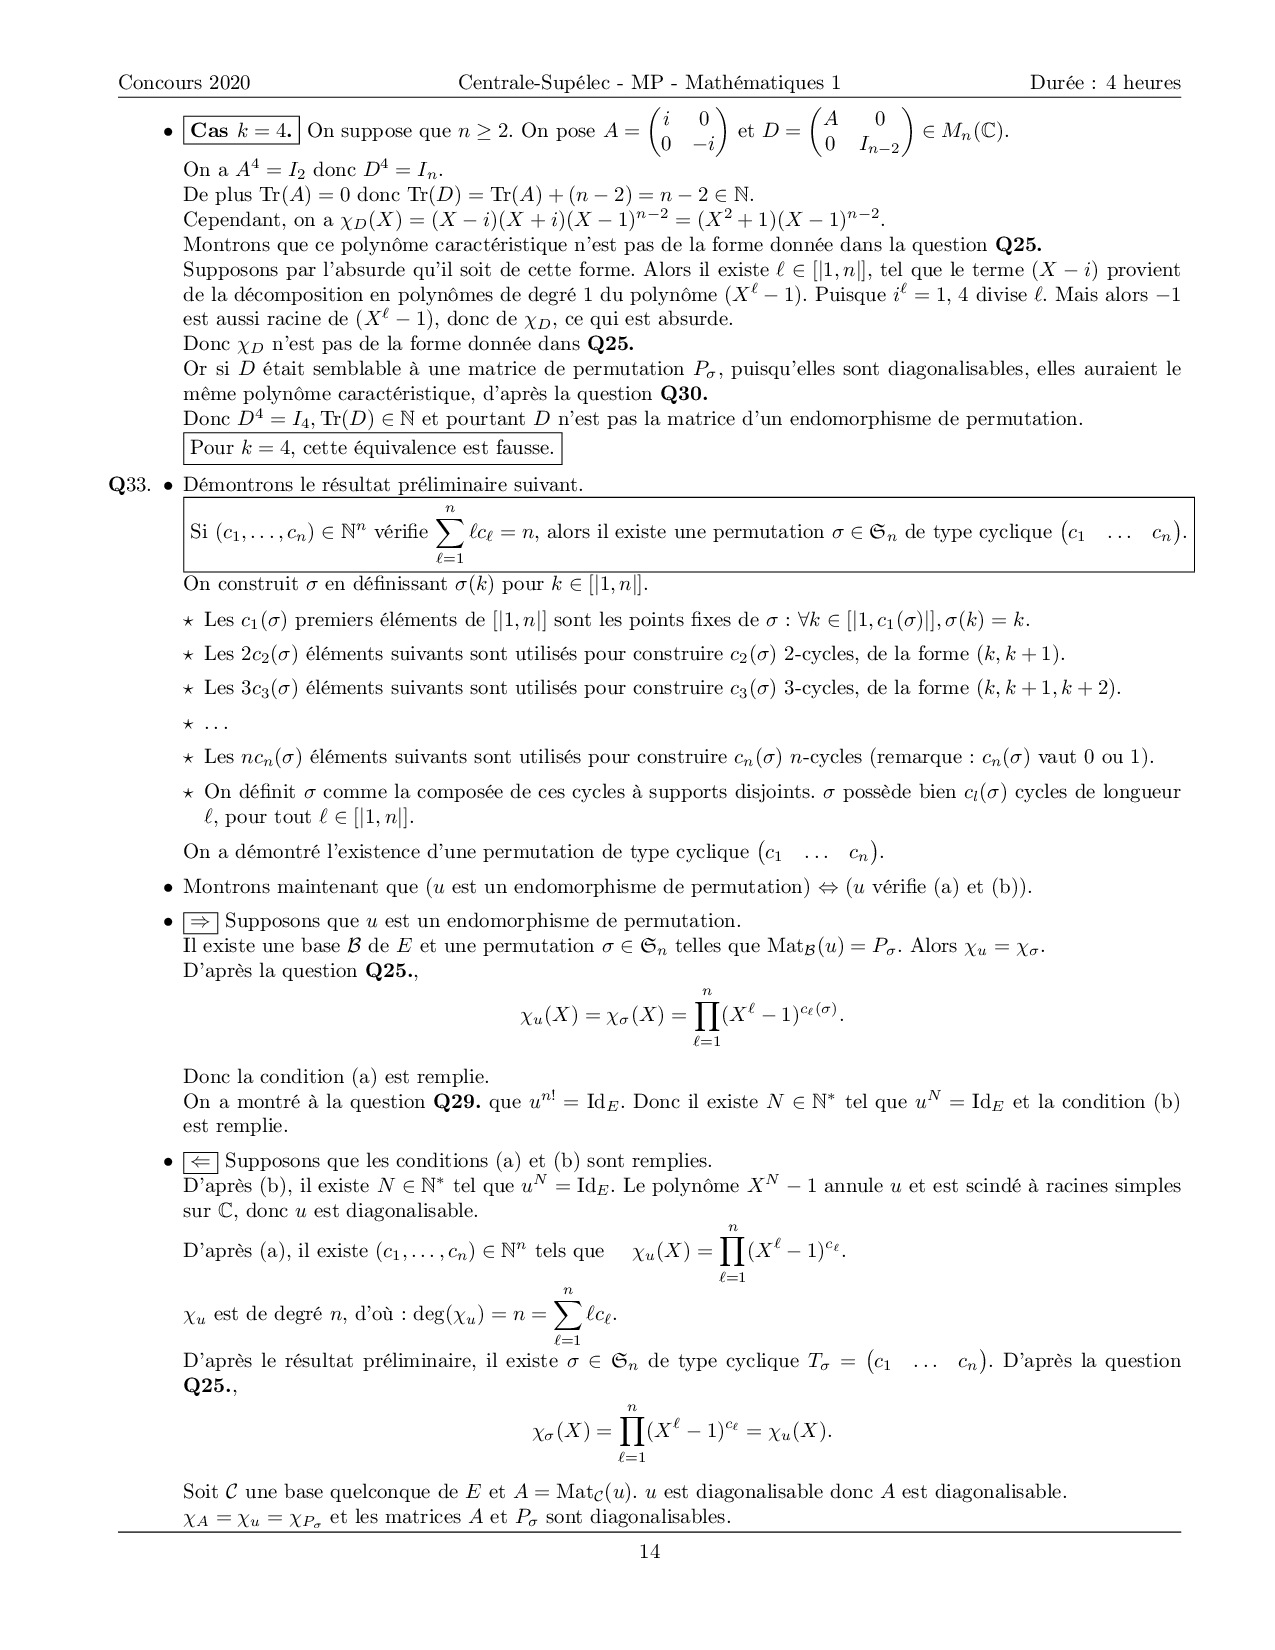 Centrale-Supelec MP 2020 Maths 1 - Corrigé - AlloSchool